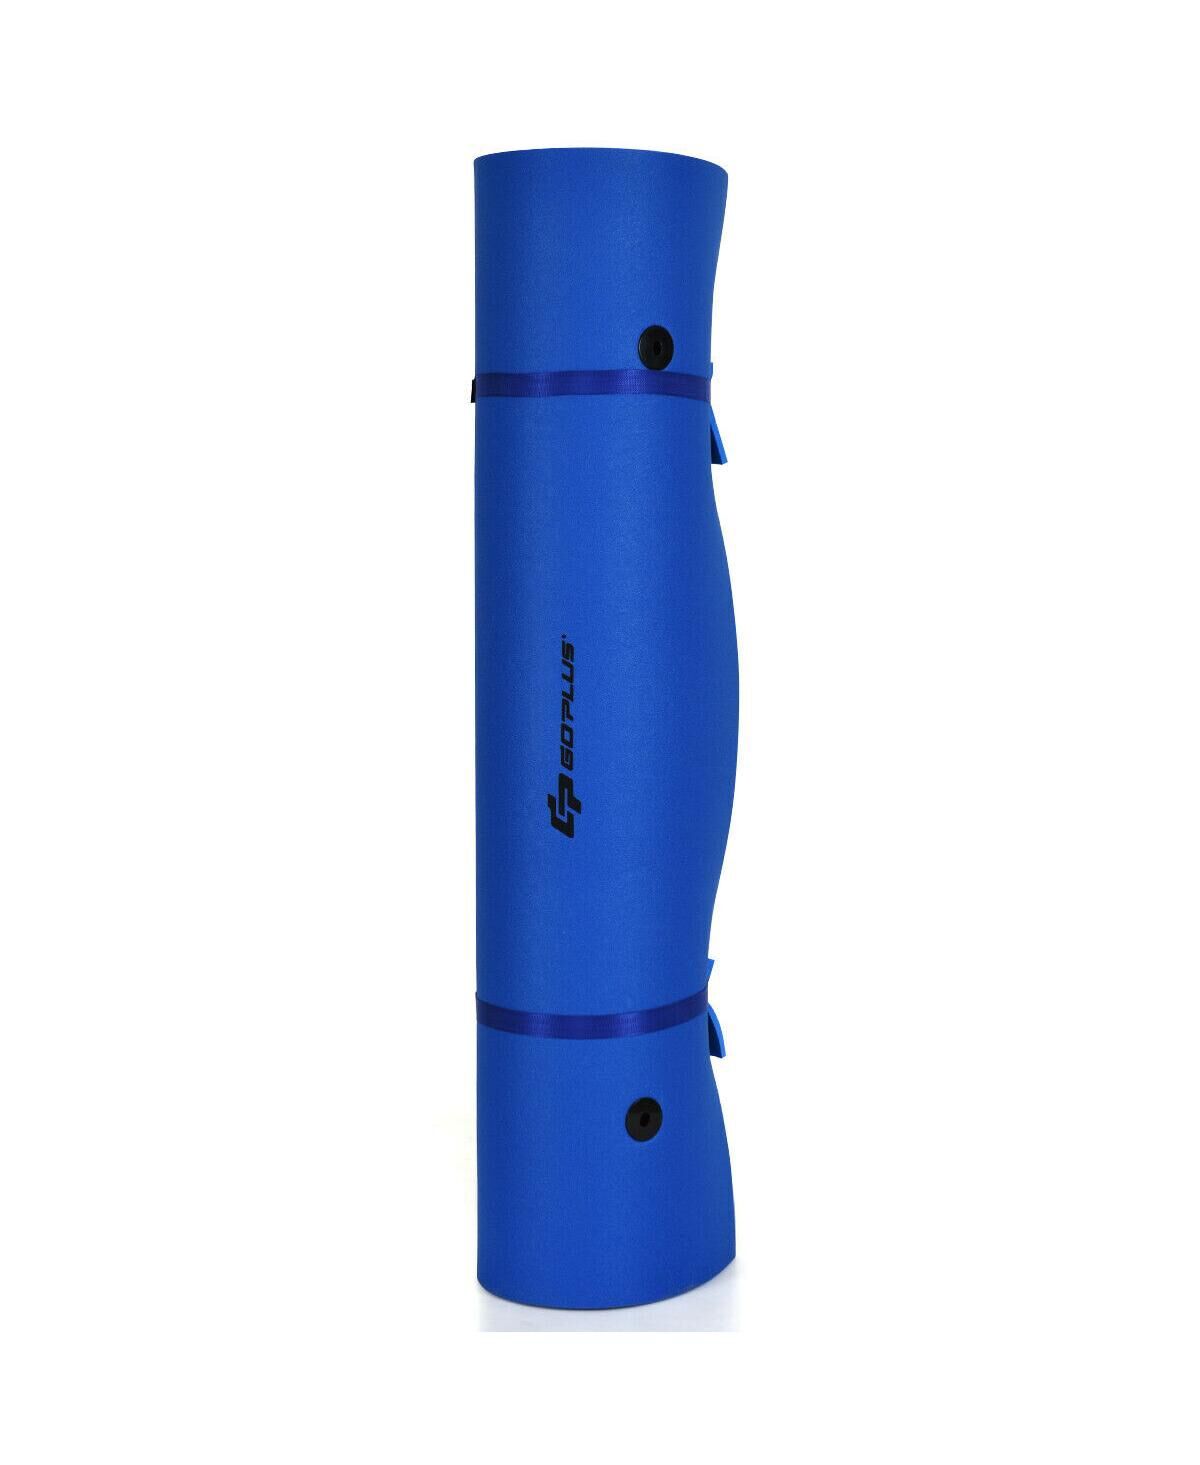 Costway 3 Layer Floating Water Pad Foam Mat Water Recreation Relaxing Tear-resistant 9' x 6' - Blue